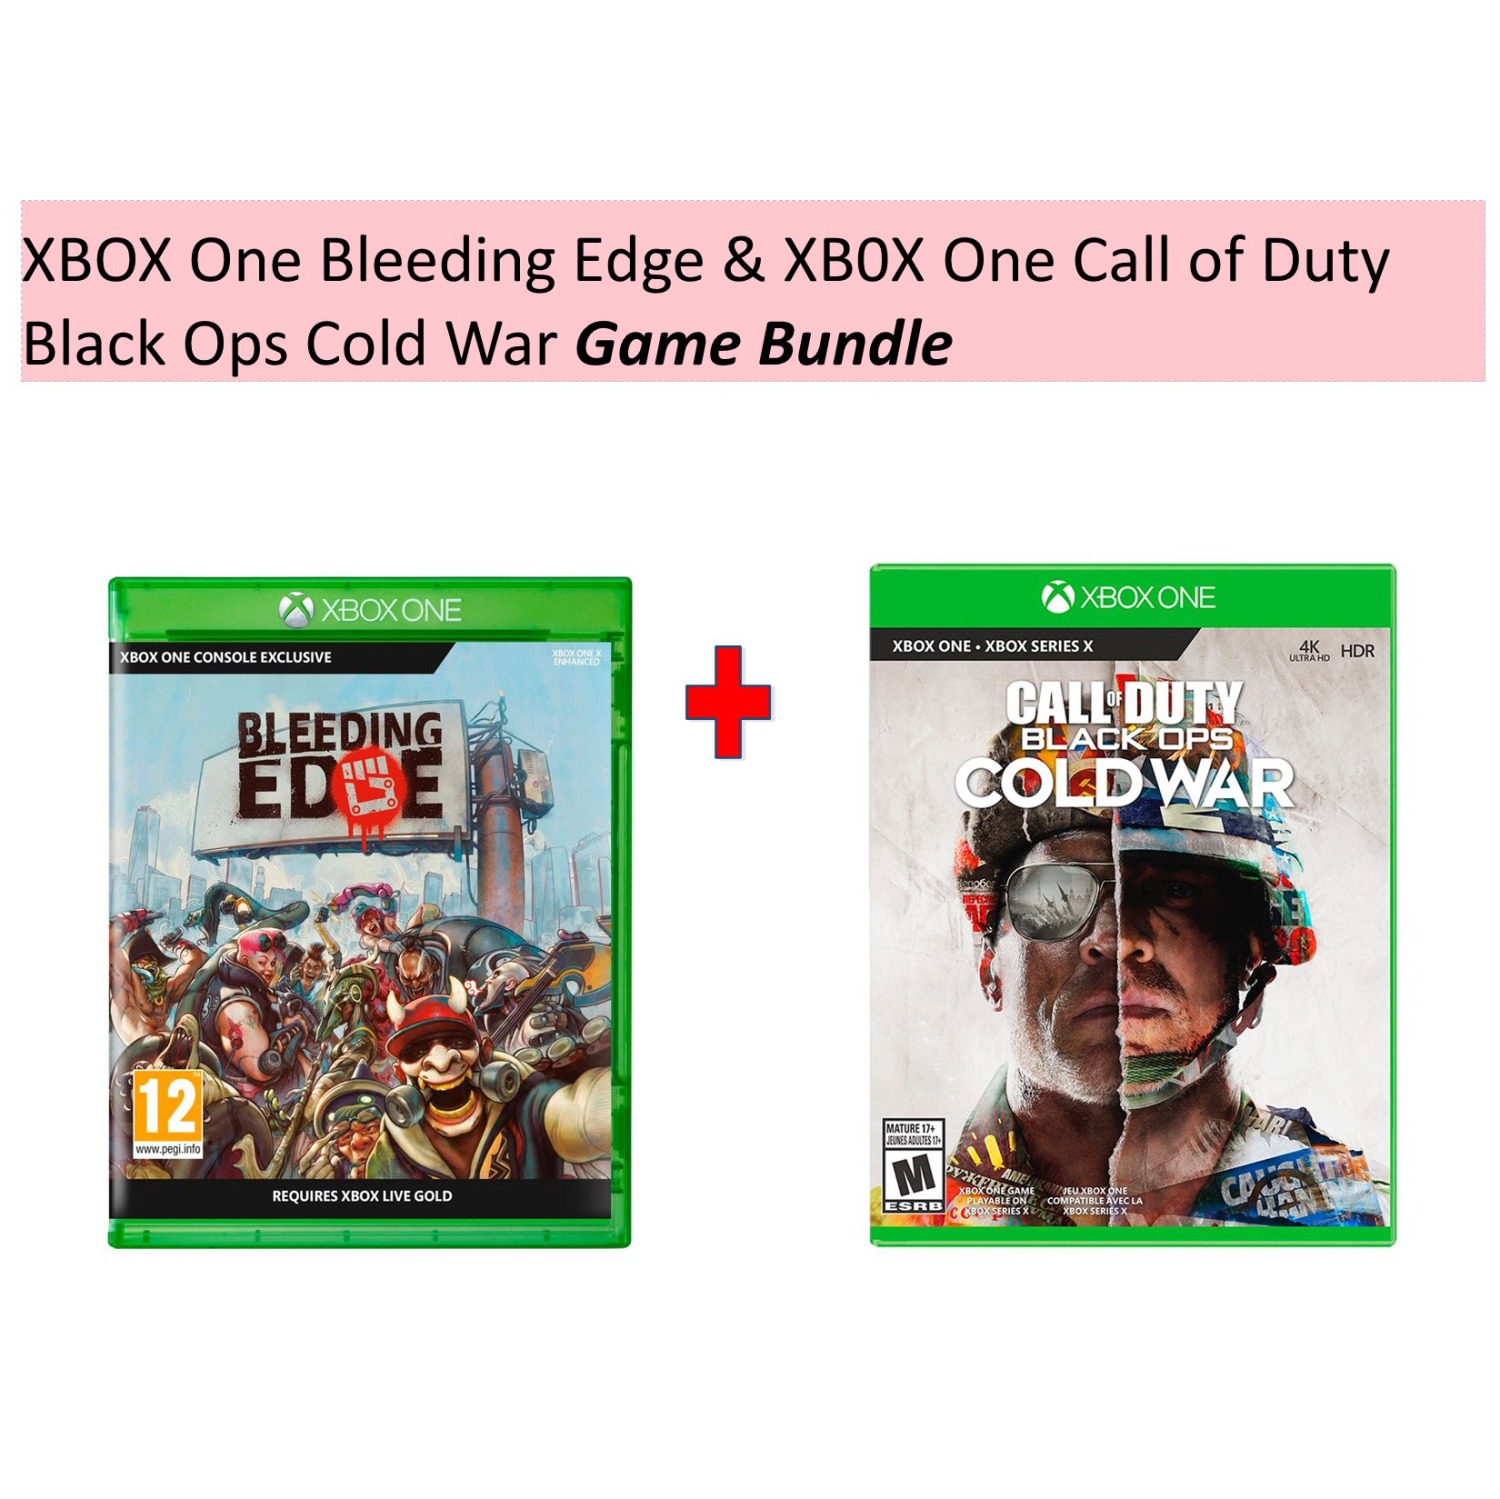 XBOX One Bleeding Edge & XB0X One Call of Duty Black Ops Cold War Game Bundle